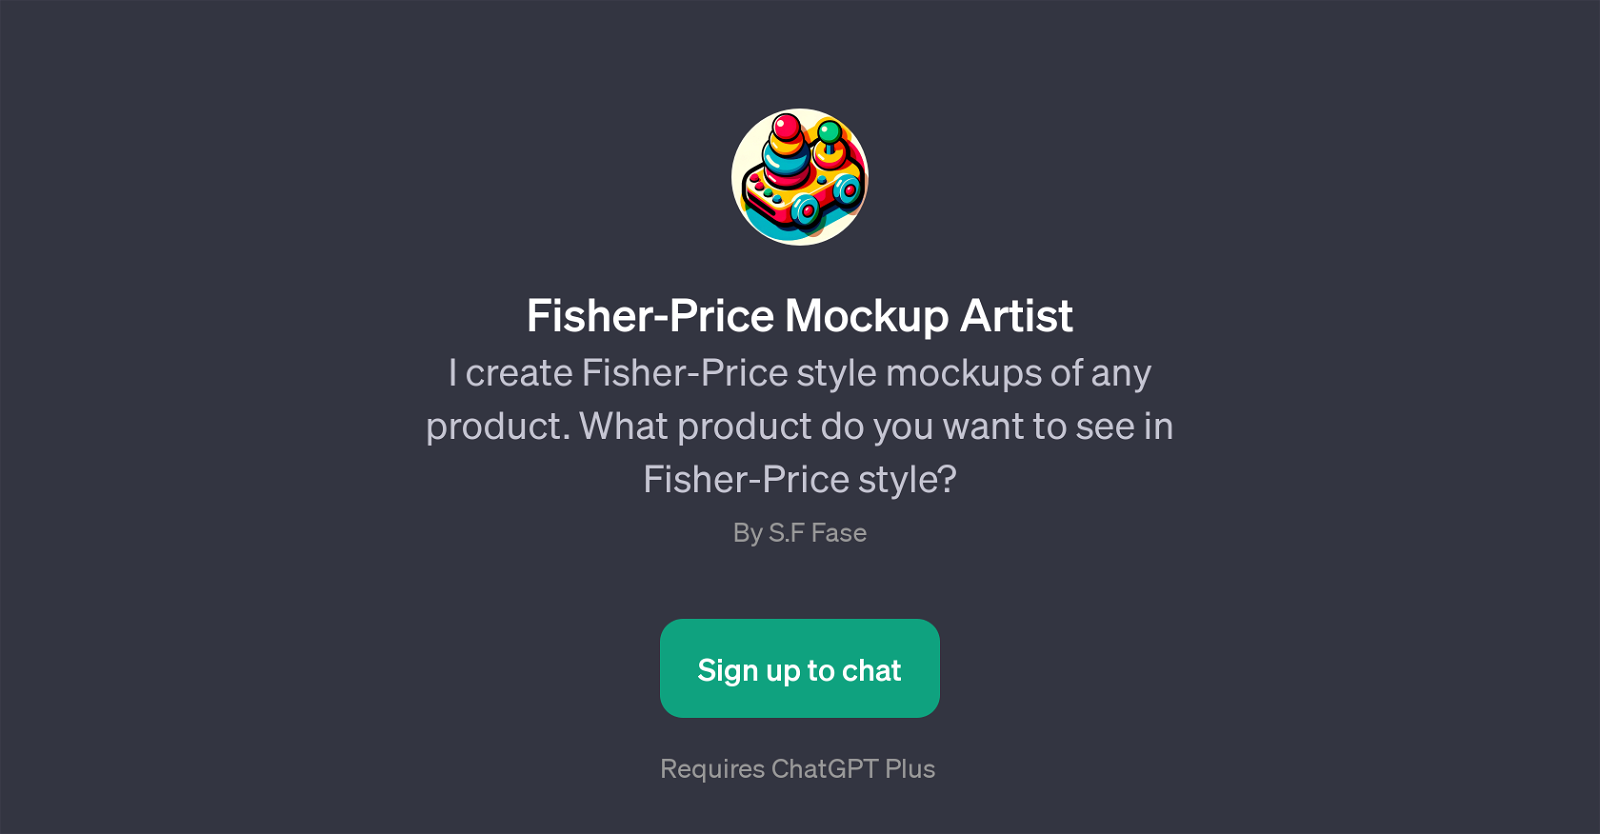 Fisher-Price Mockup Artist website